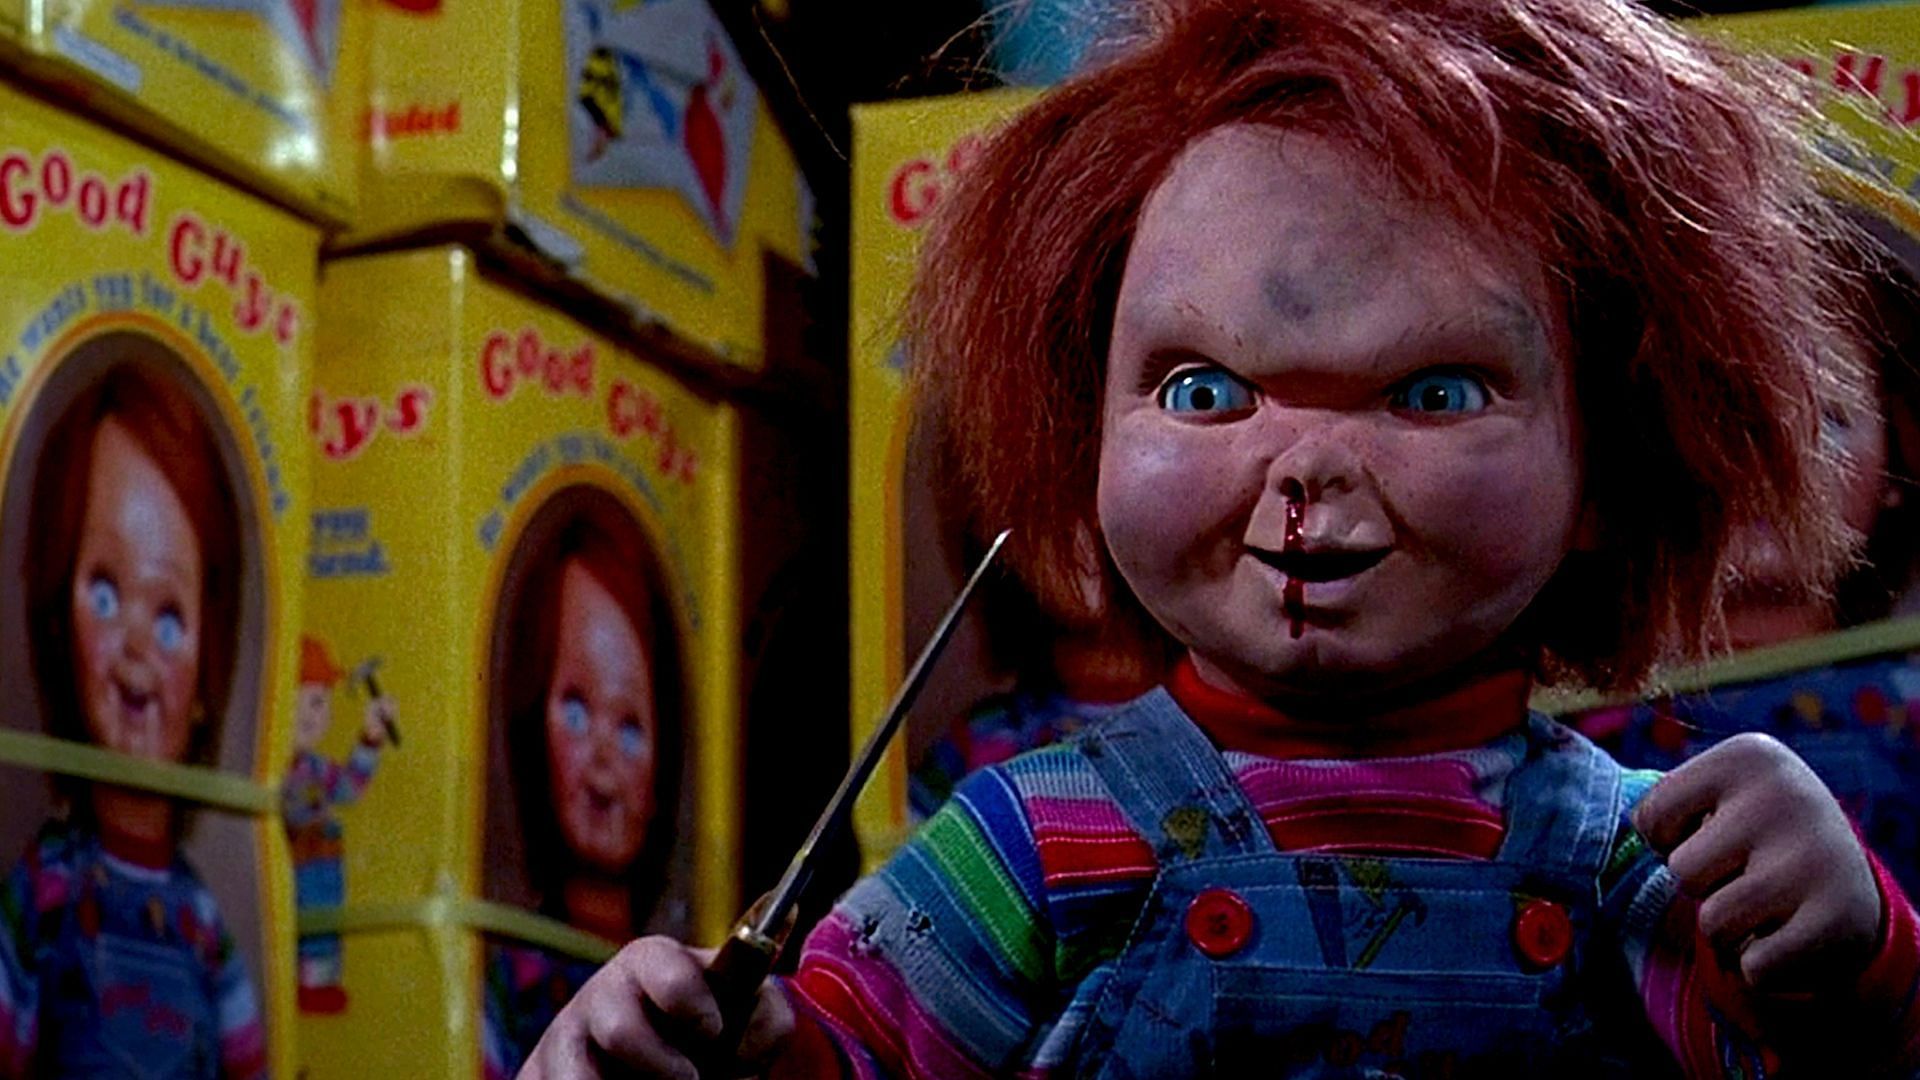 A still of Chucky (Image via IMDB)